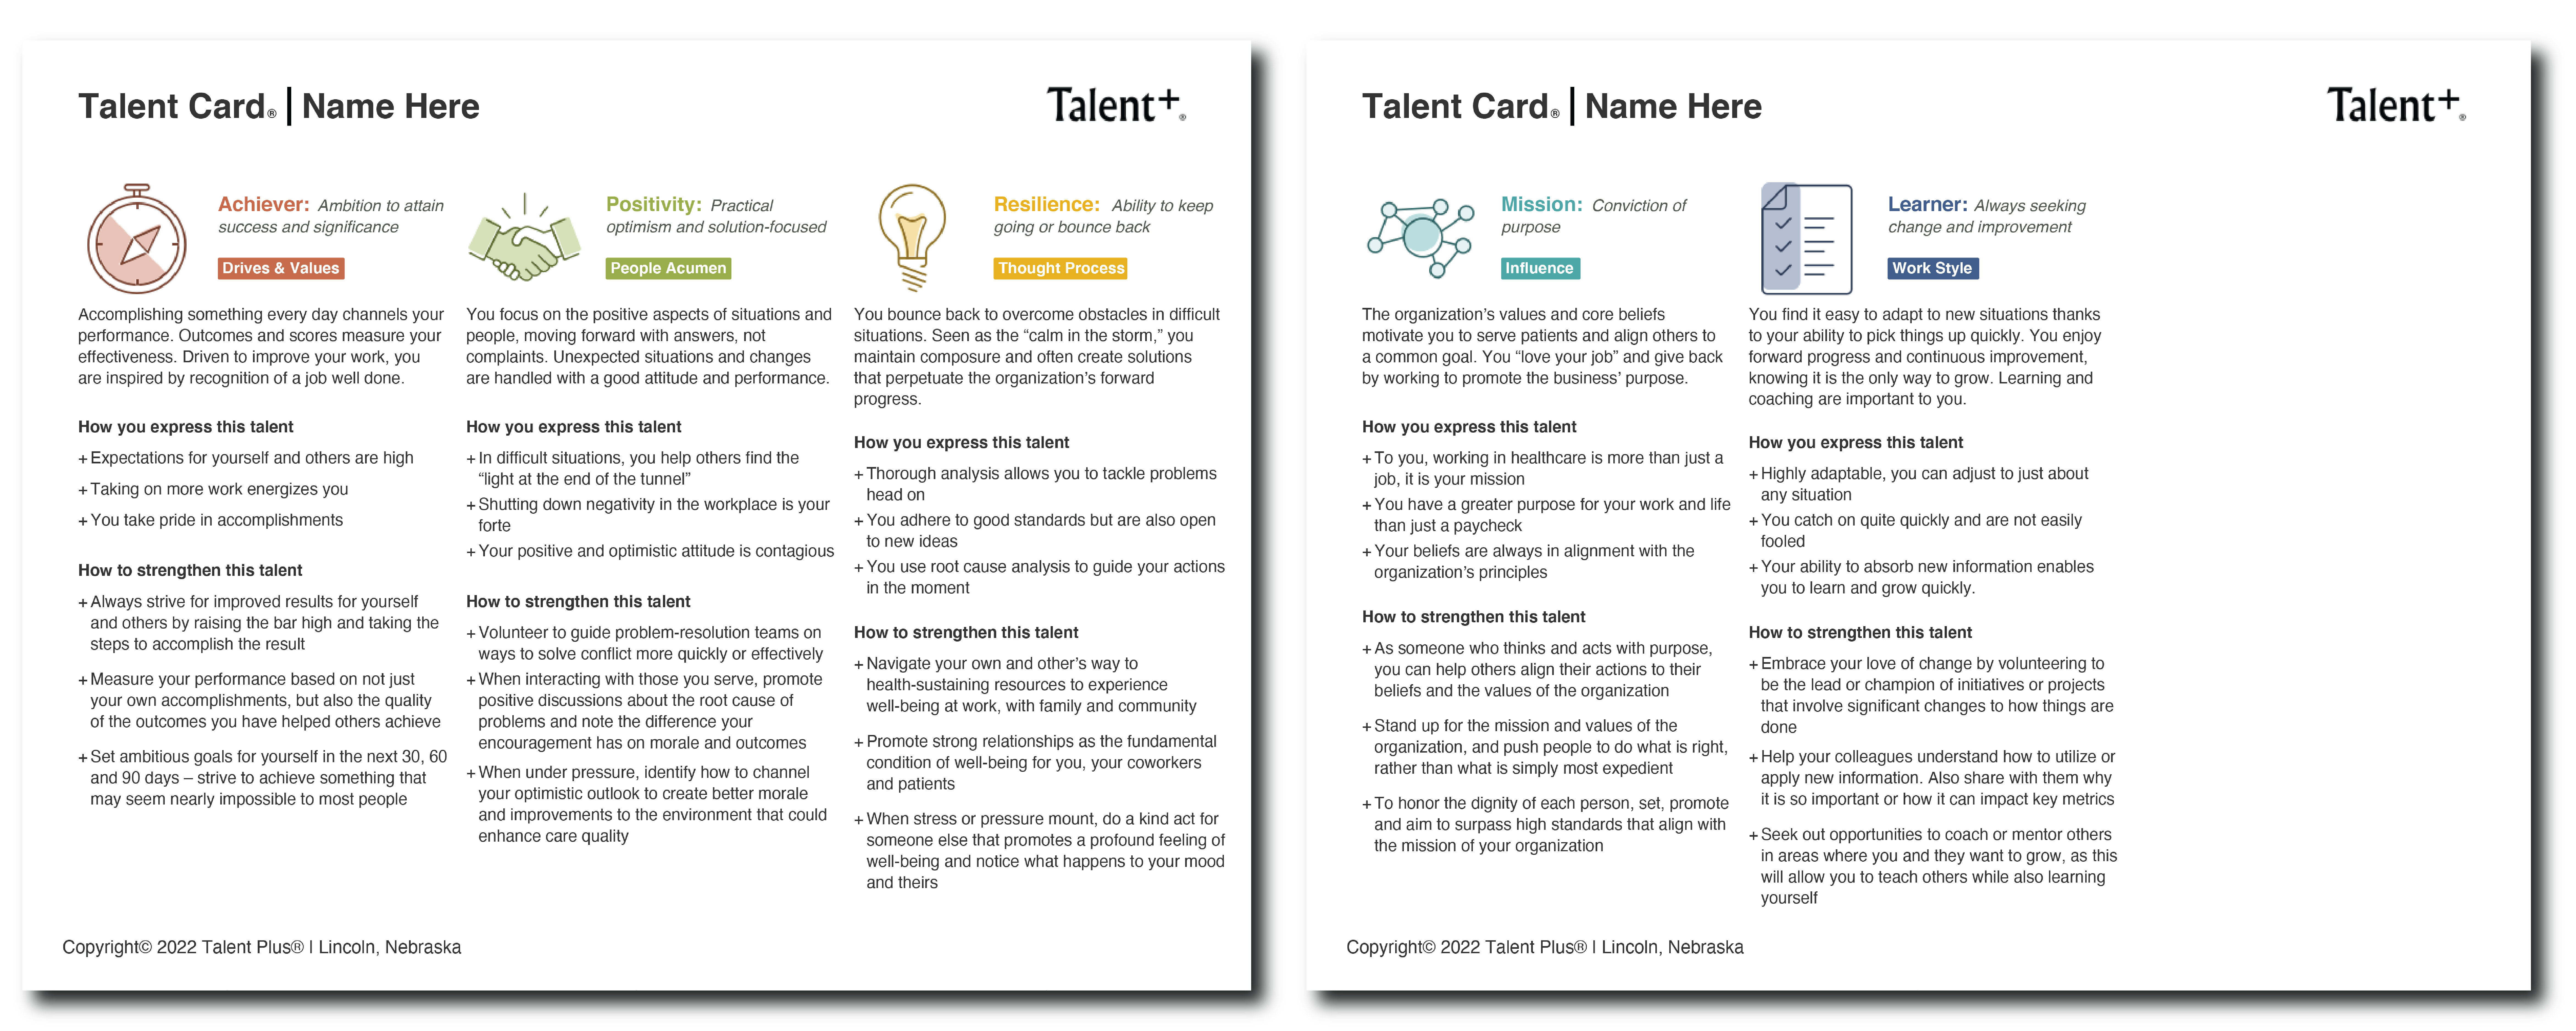 Talent Card Expanded | Talent Plus